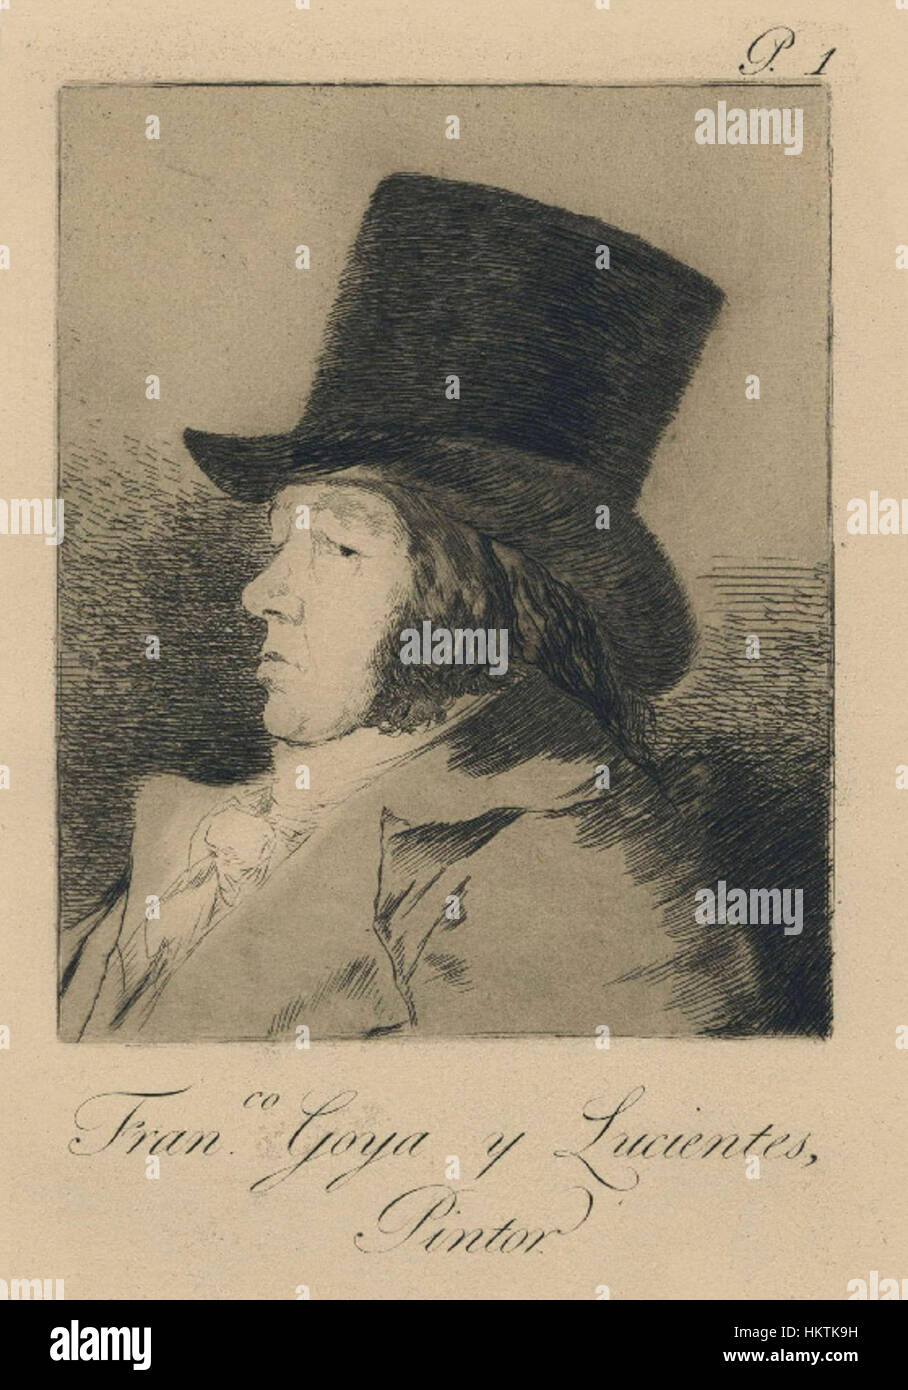 Francisco Goya y Lucientes Pintor Stock Photo